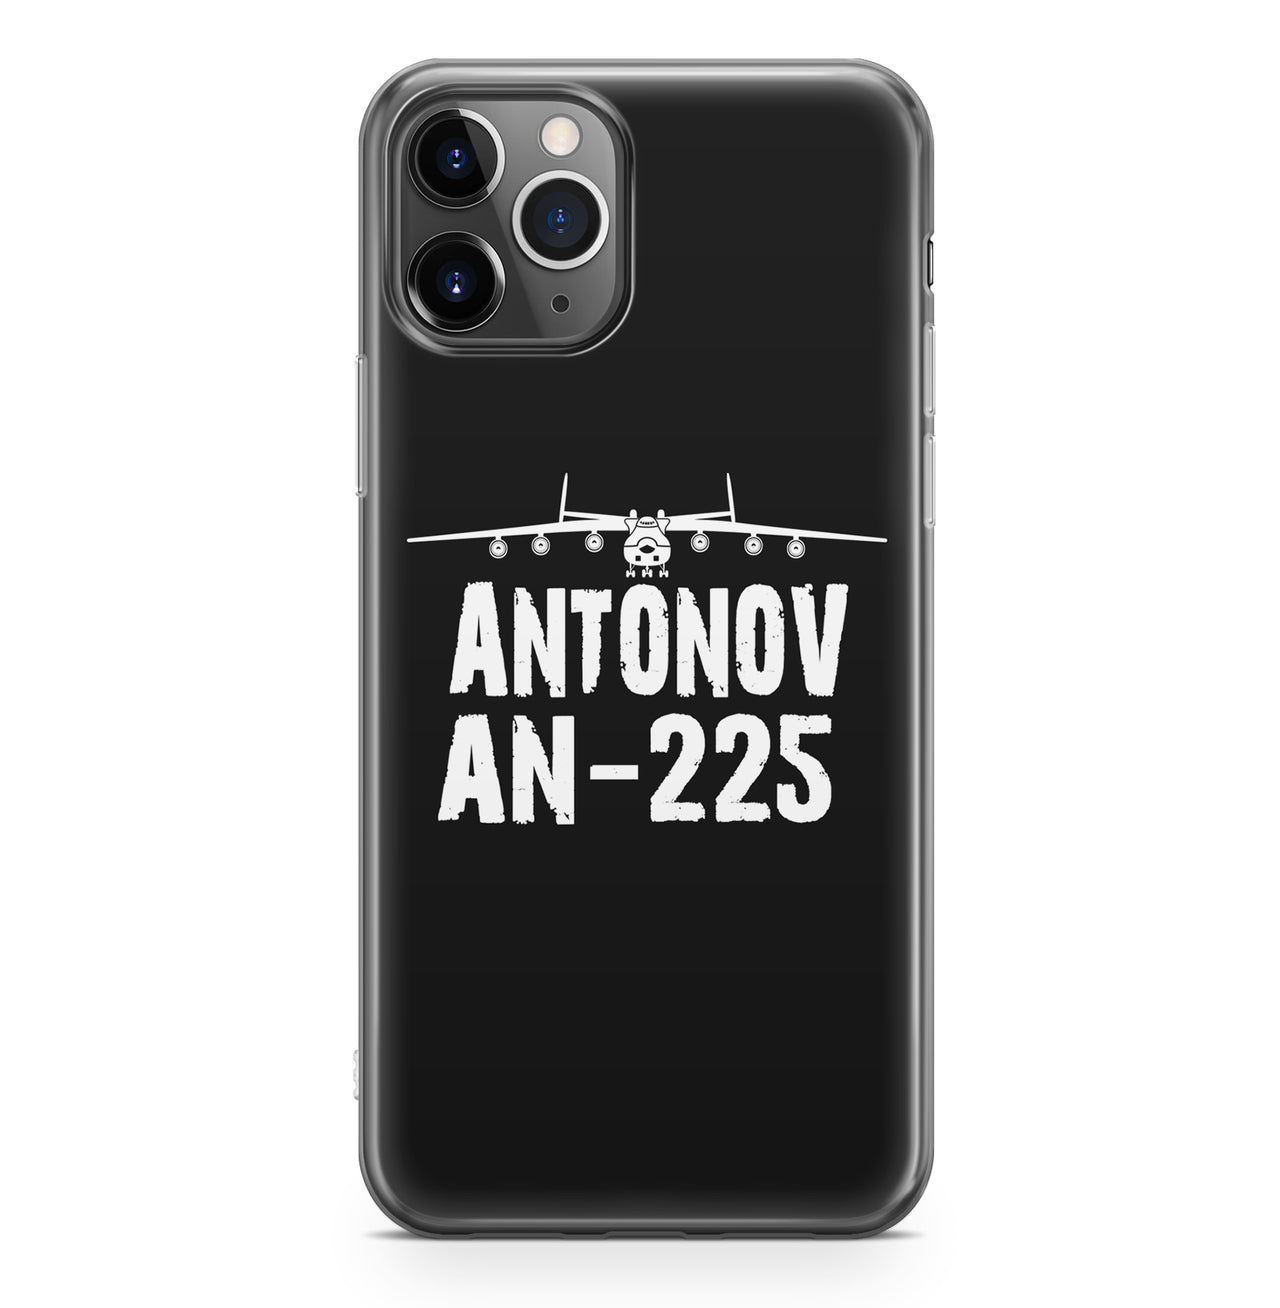 Antonov AN-225 & Plane Designed iPhone Cases